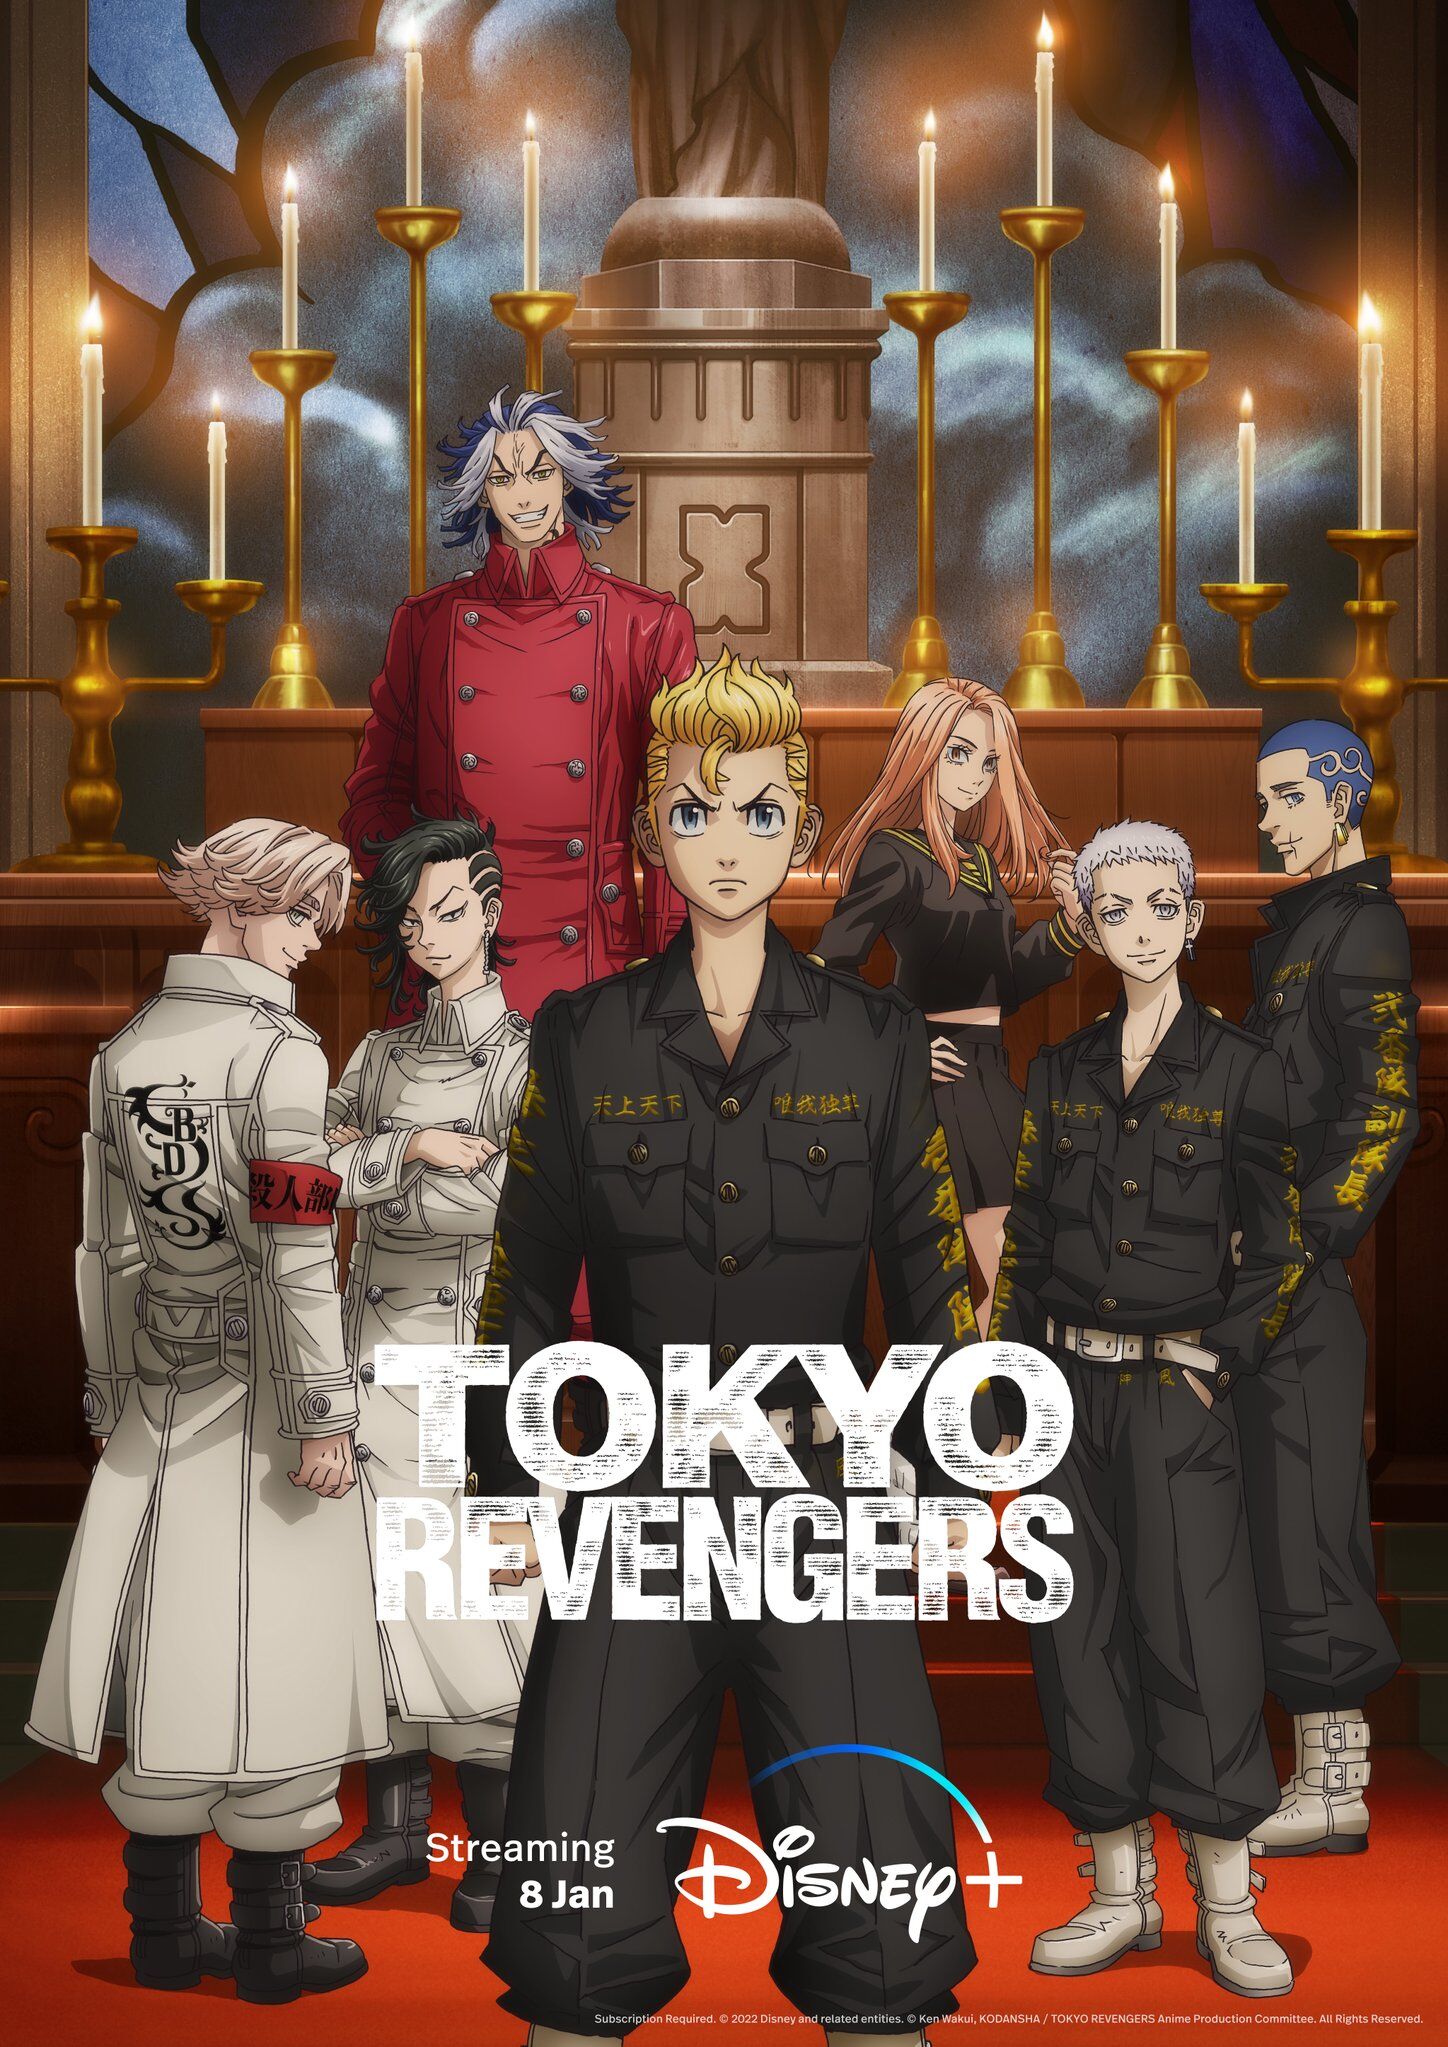 Season 2 Of Tokyo Revengers Will Cover The Christmas Showdown Arc